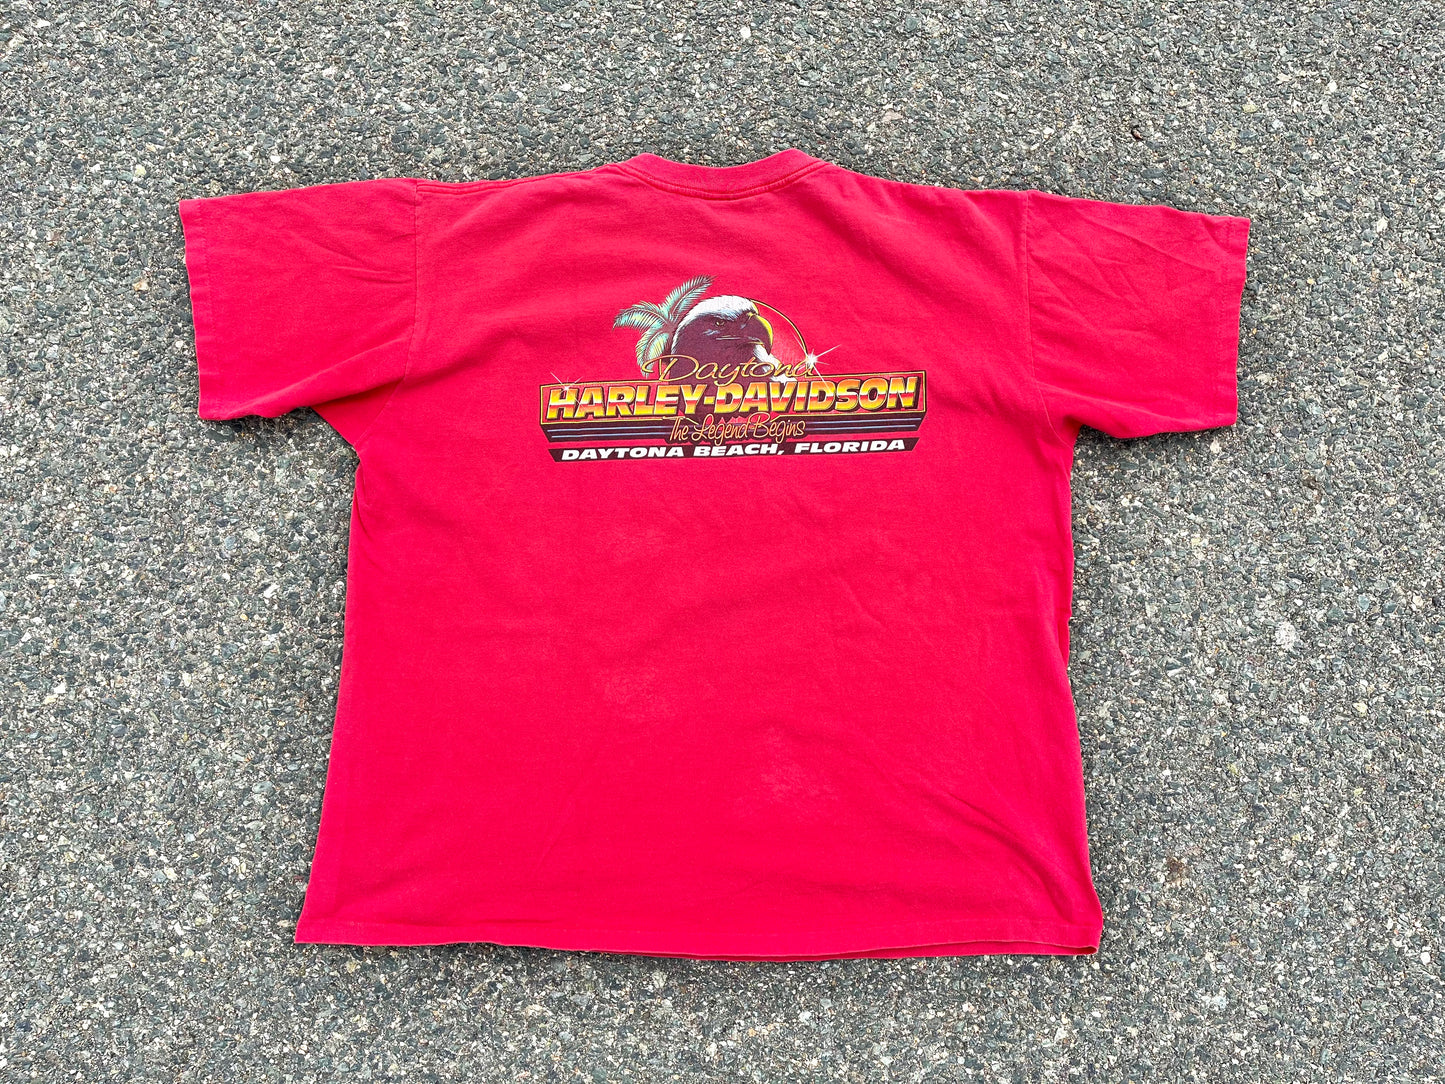 Vintage Harley Davidson Daytona Beach Florida Retro 90's Eagle Native American T Shirt Size XL Made in the USA 1992